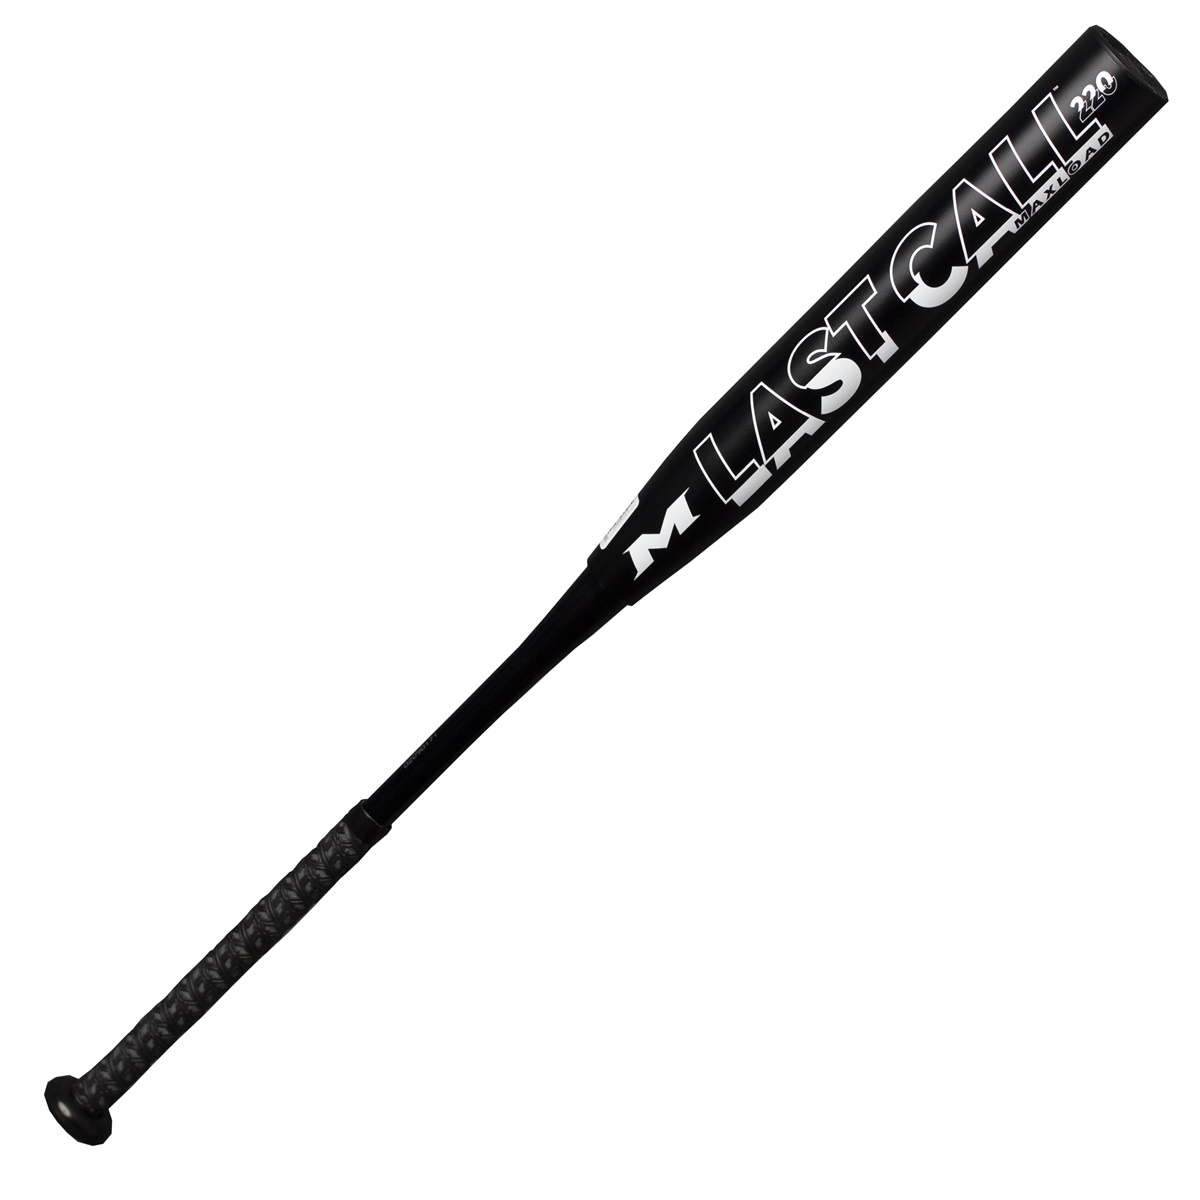 miken-last-call-12-barrel-maxload-usssa-slow-pitch-softball-bat-34-inch-28-oz MLC12U-3-28 Miken 658925045493 Dont miss out on the 2021 Last Call USSSA bat! USSSA